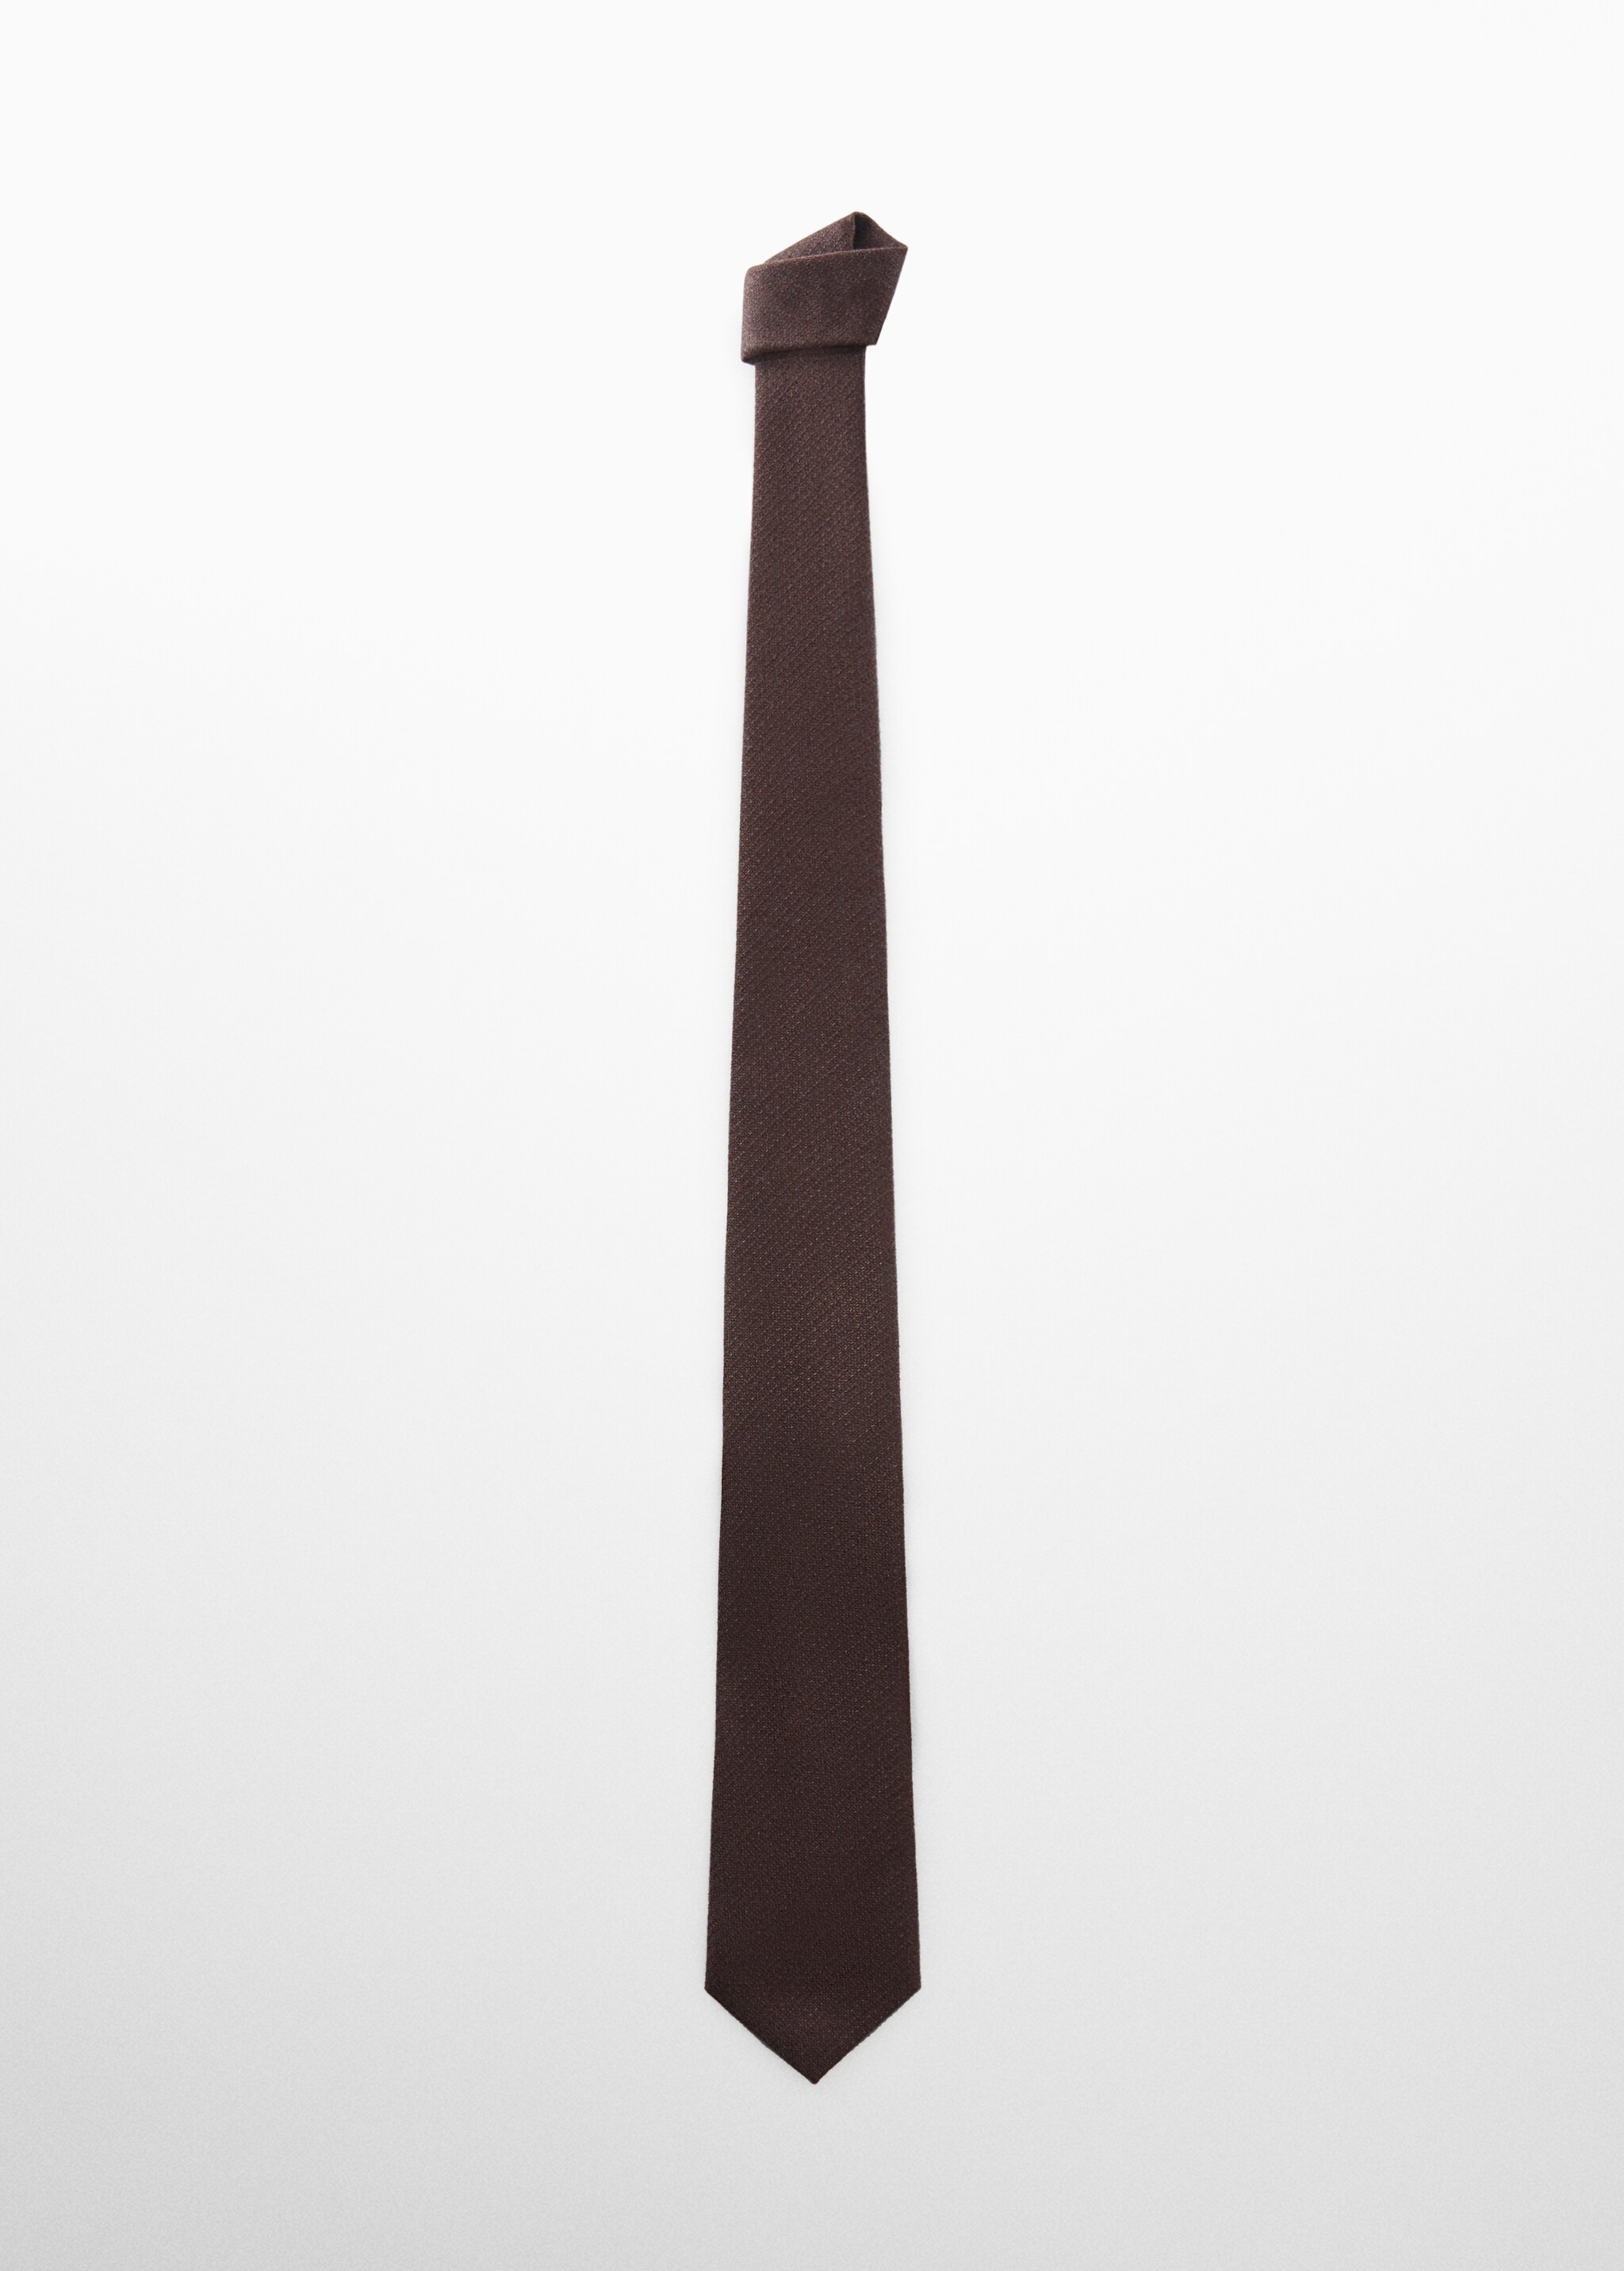 Pamuklu kravat - Modelsiz ürün